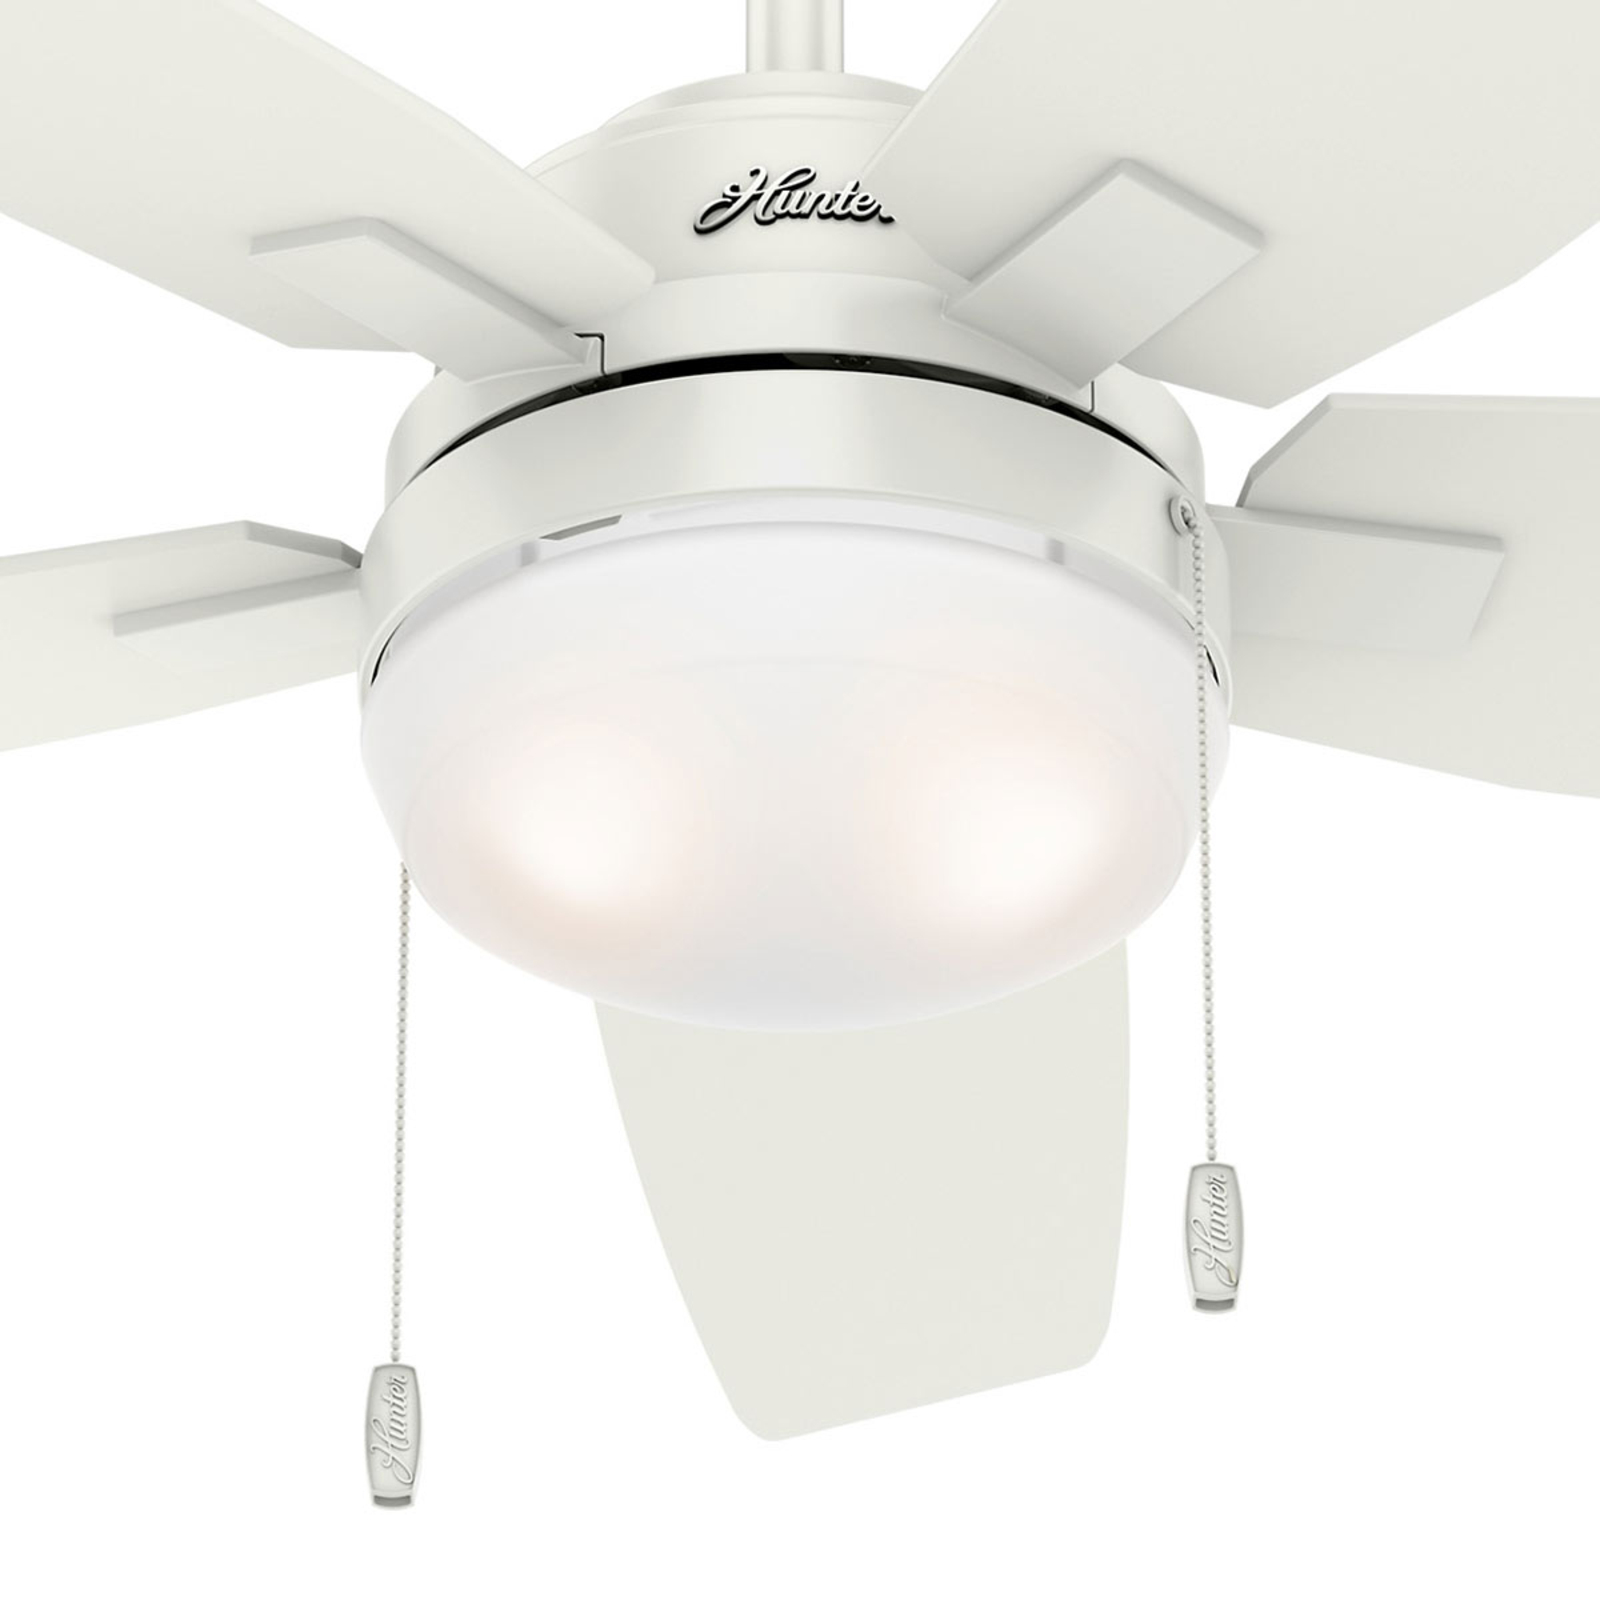 Hunter Arcot ventilátor világítással, fehér/szürke